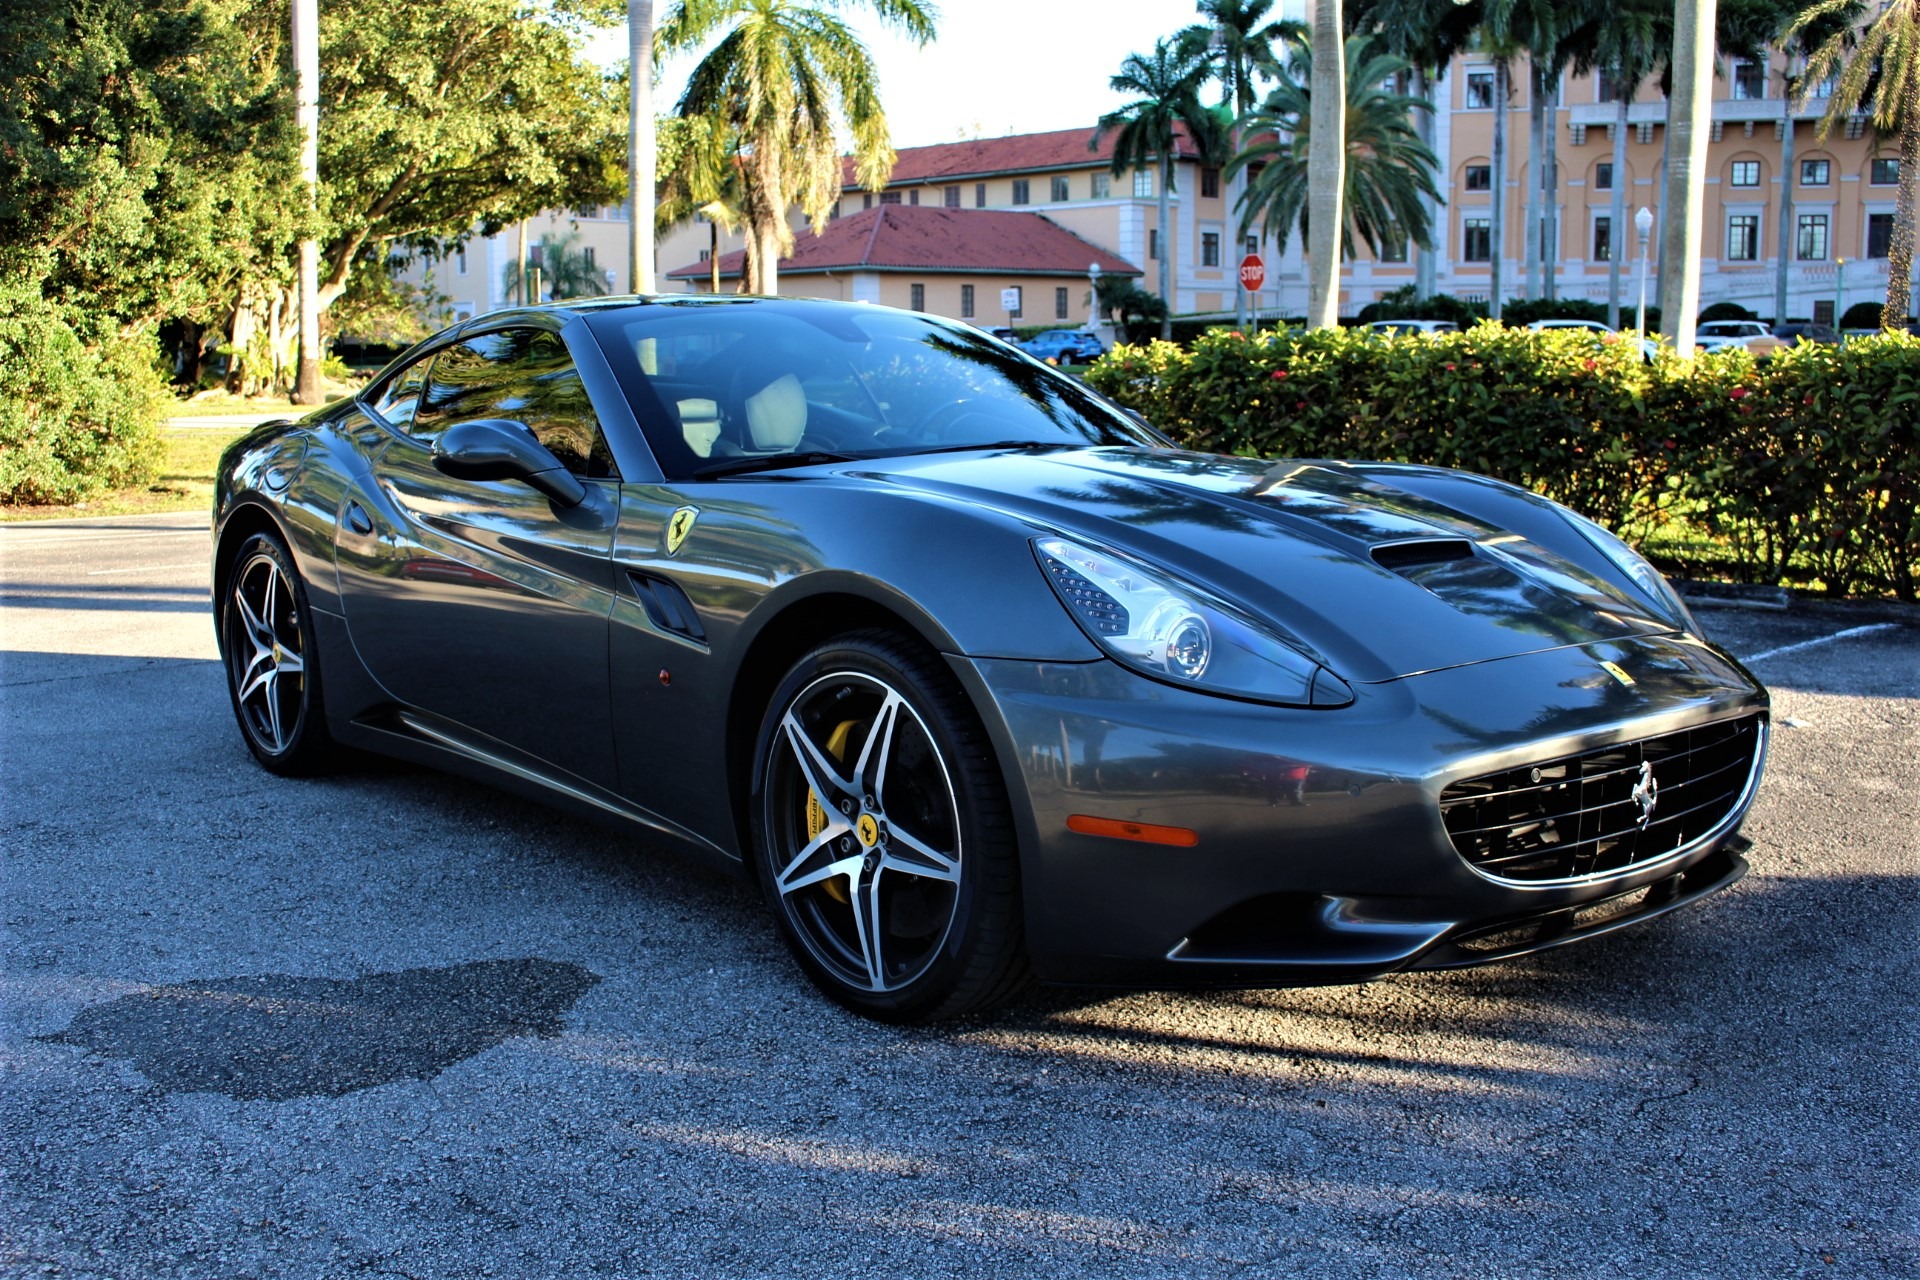 Used 2011 Ferrari California for sale $105,850 at The Gables Sports Cars in Miami FL 33146 3